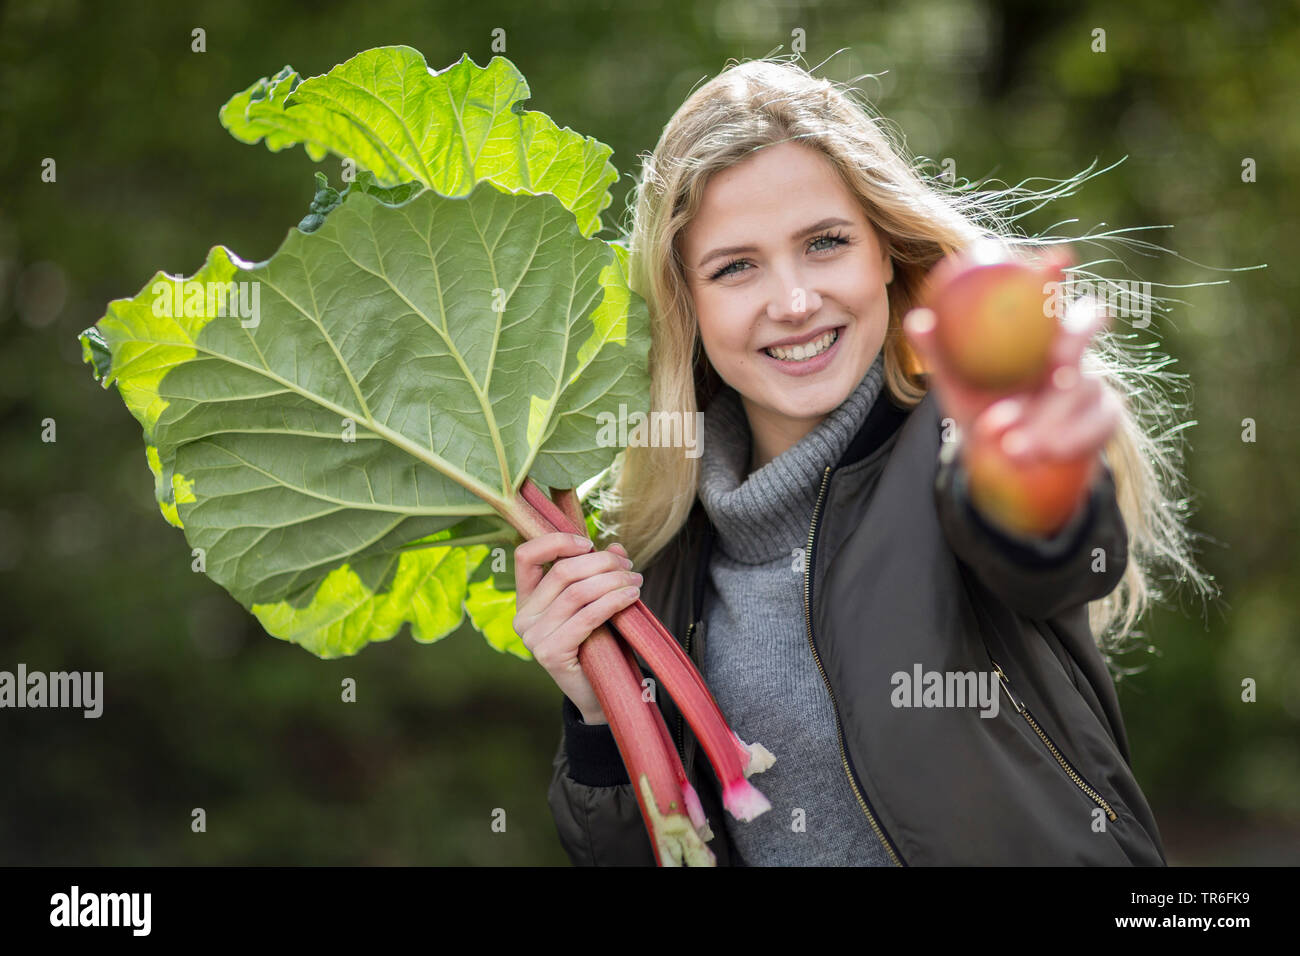 rhubarb (Rheum rhabarbarum), young blond woman with fresh picked rhubarb and apples, Germany Stock Photo